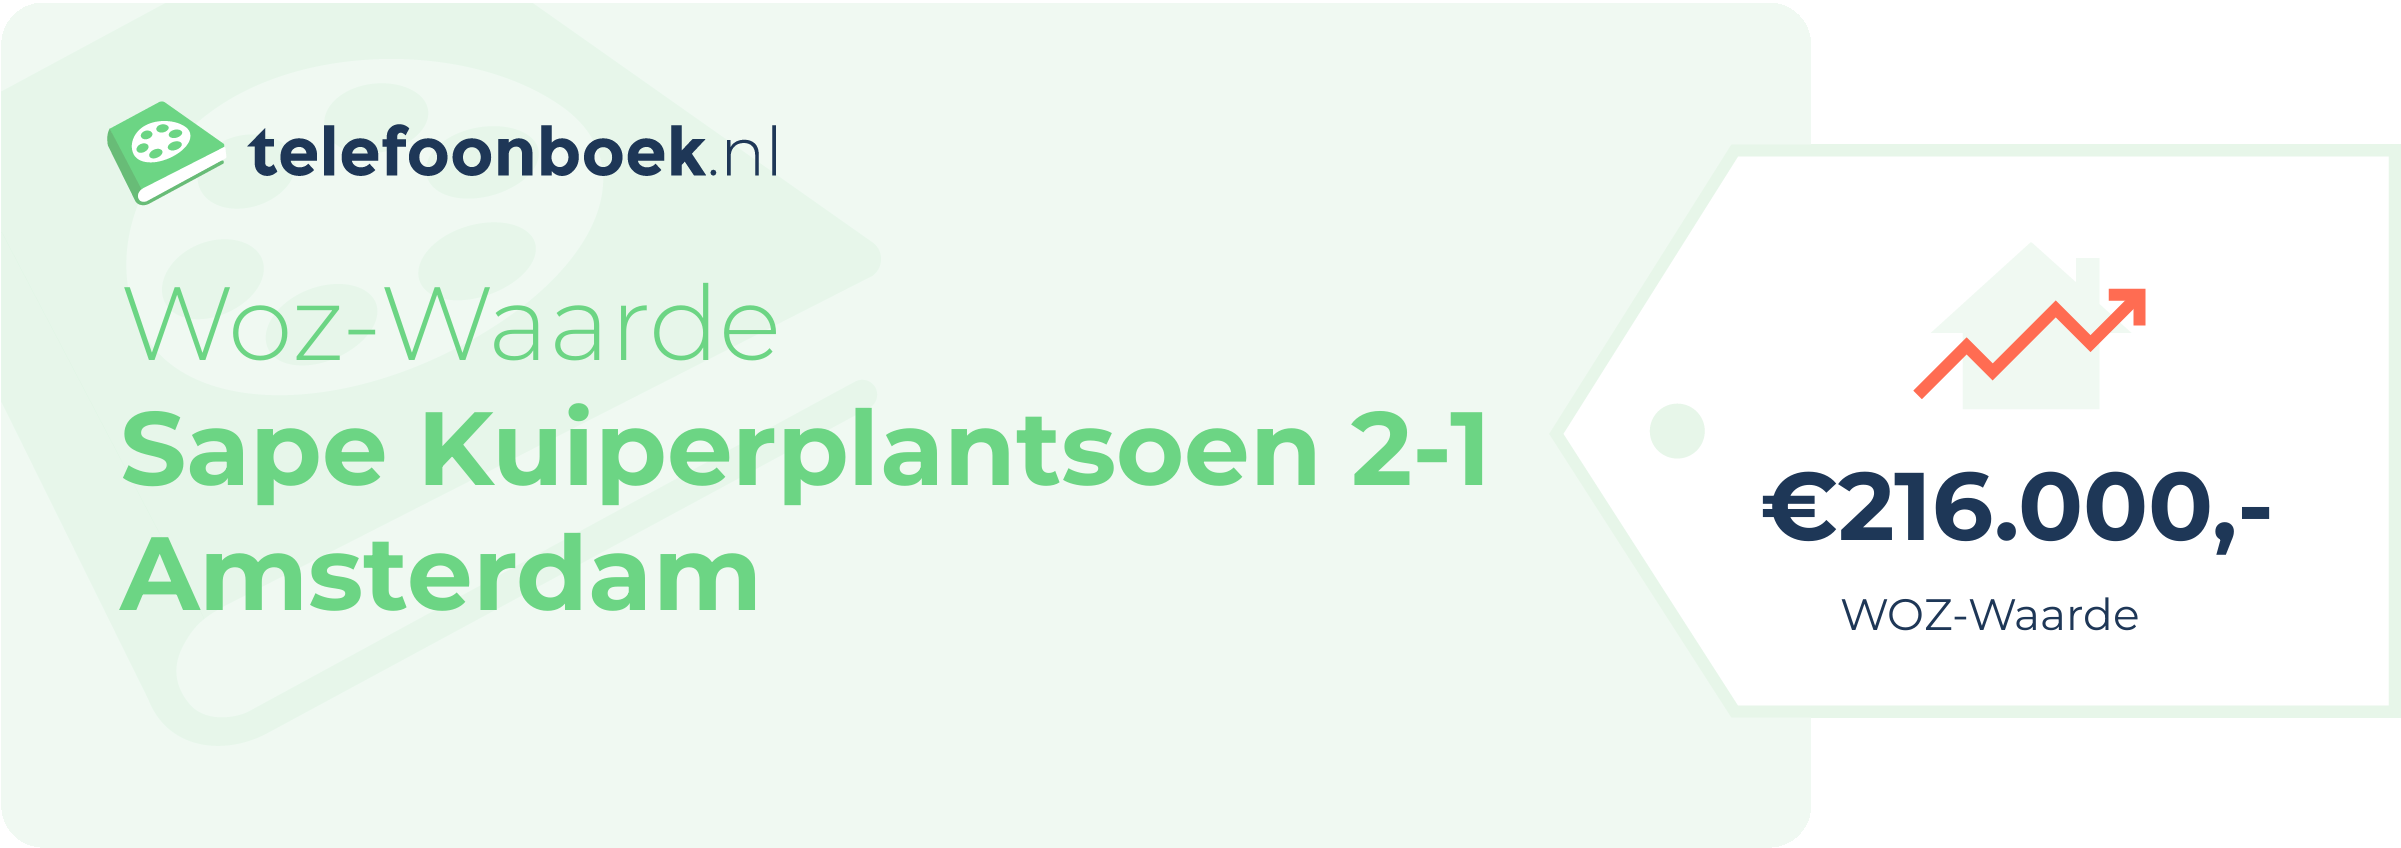 WOZ-waarde Sape Kuiperplantsoen 2-1 Amsterdam